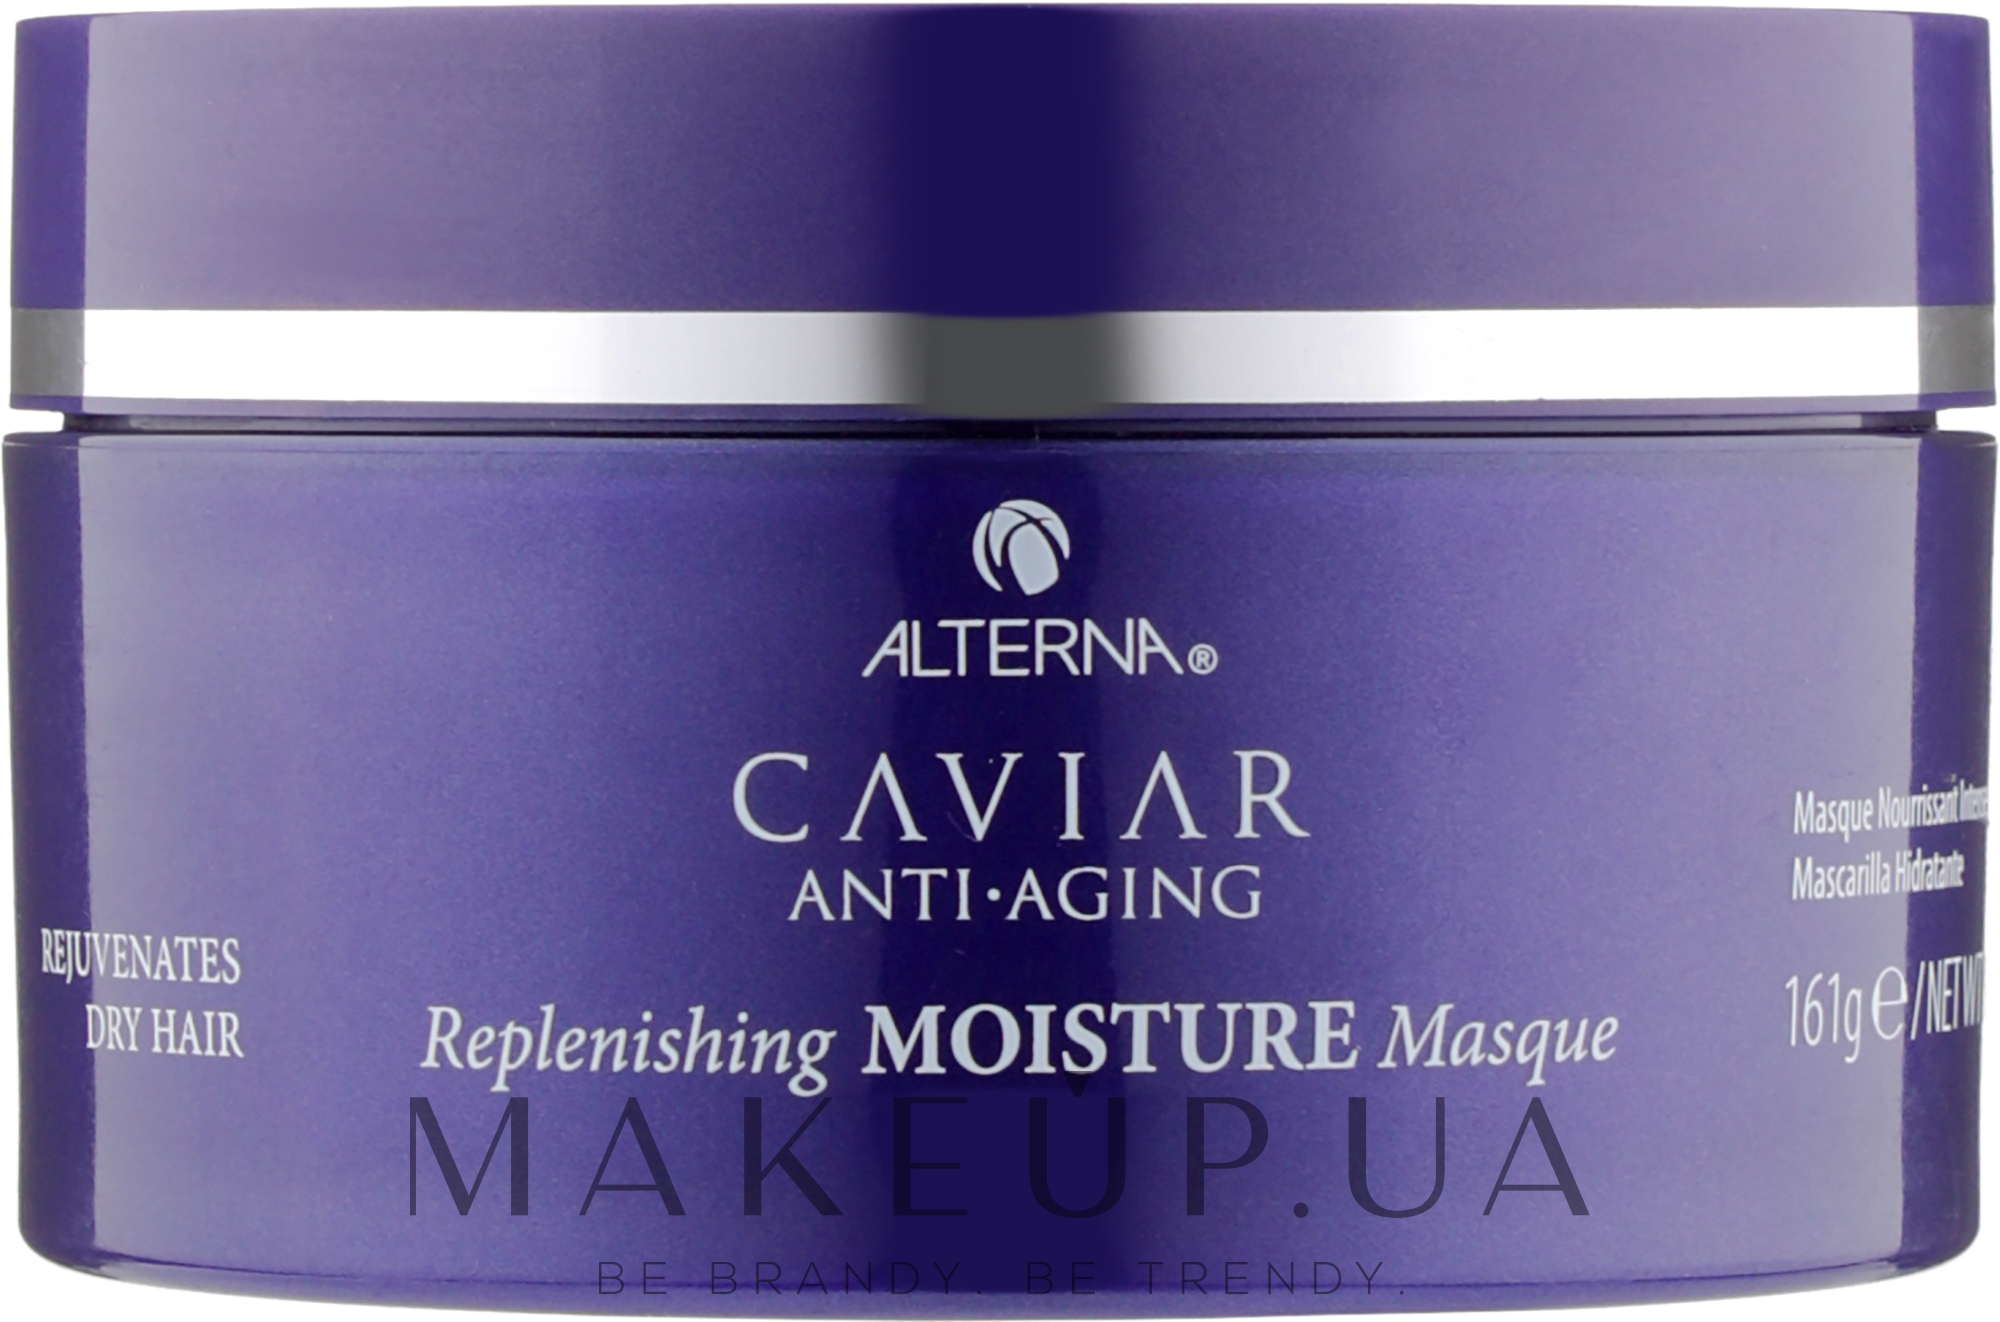 Увлажняющая маска - Alterna Caviar Anti-Aging Replenishing Moisture Masque — фото 161g